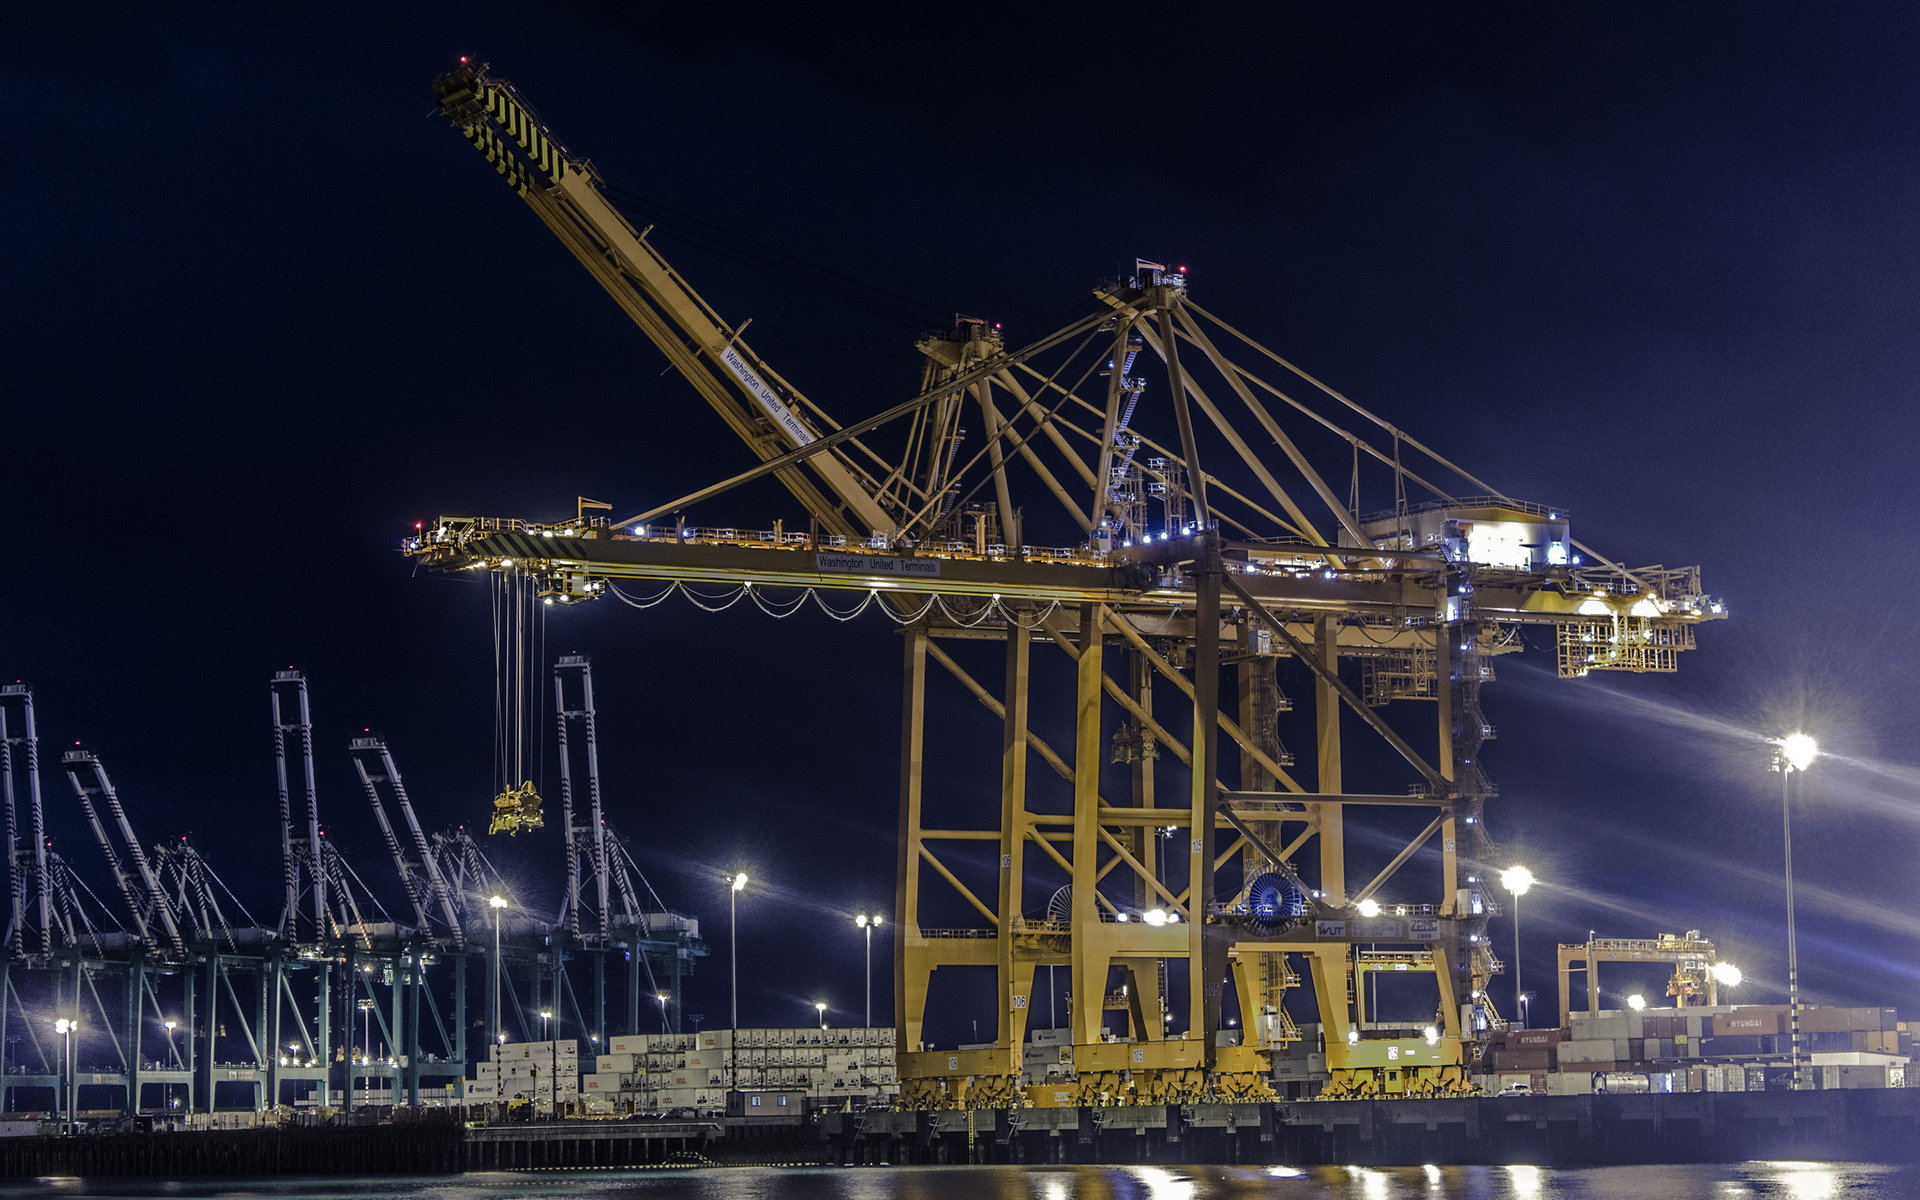 Crane Night Port Mechanical Mech Machinery - Port Crane At Night - HD Wallpaper 